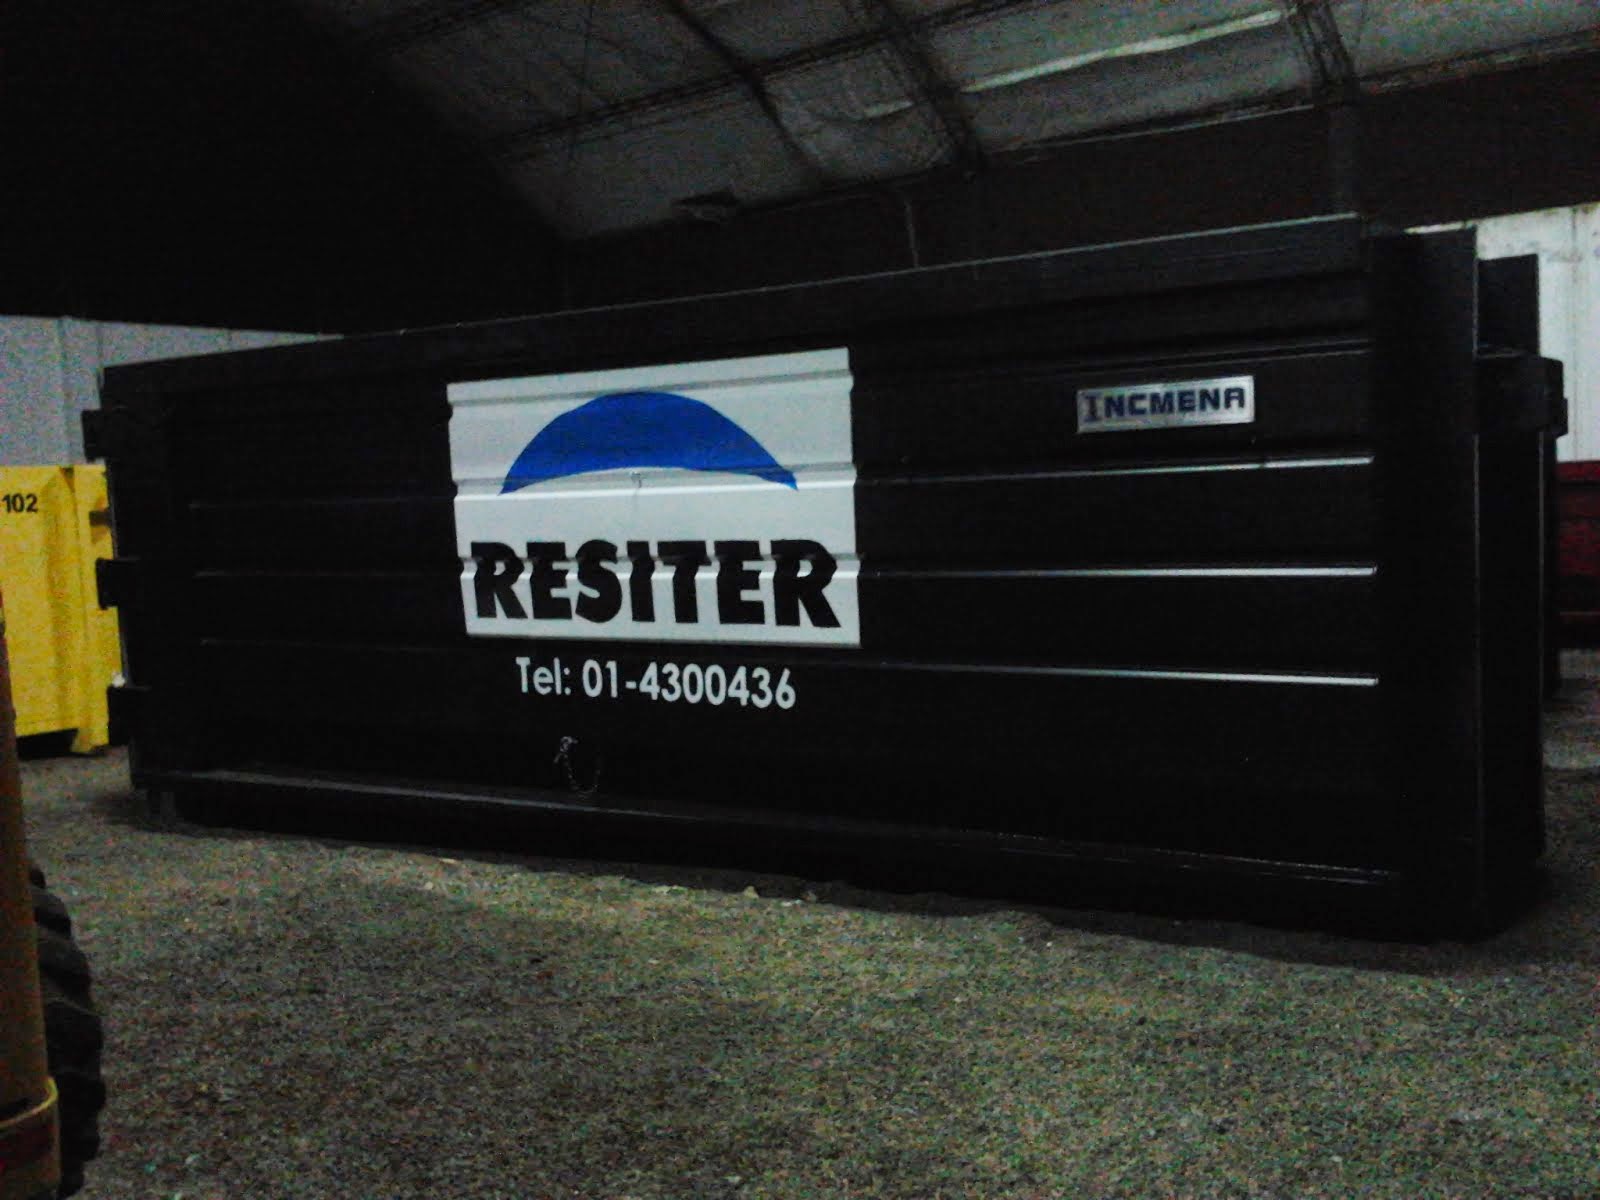 resiter - PINTADO DE CONTEINER